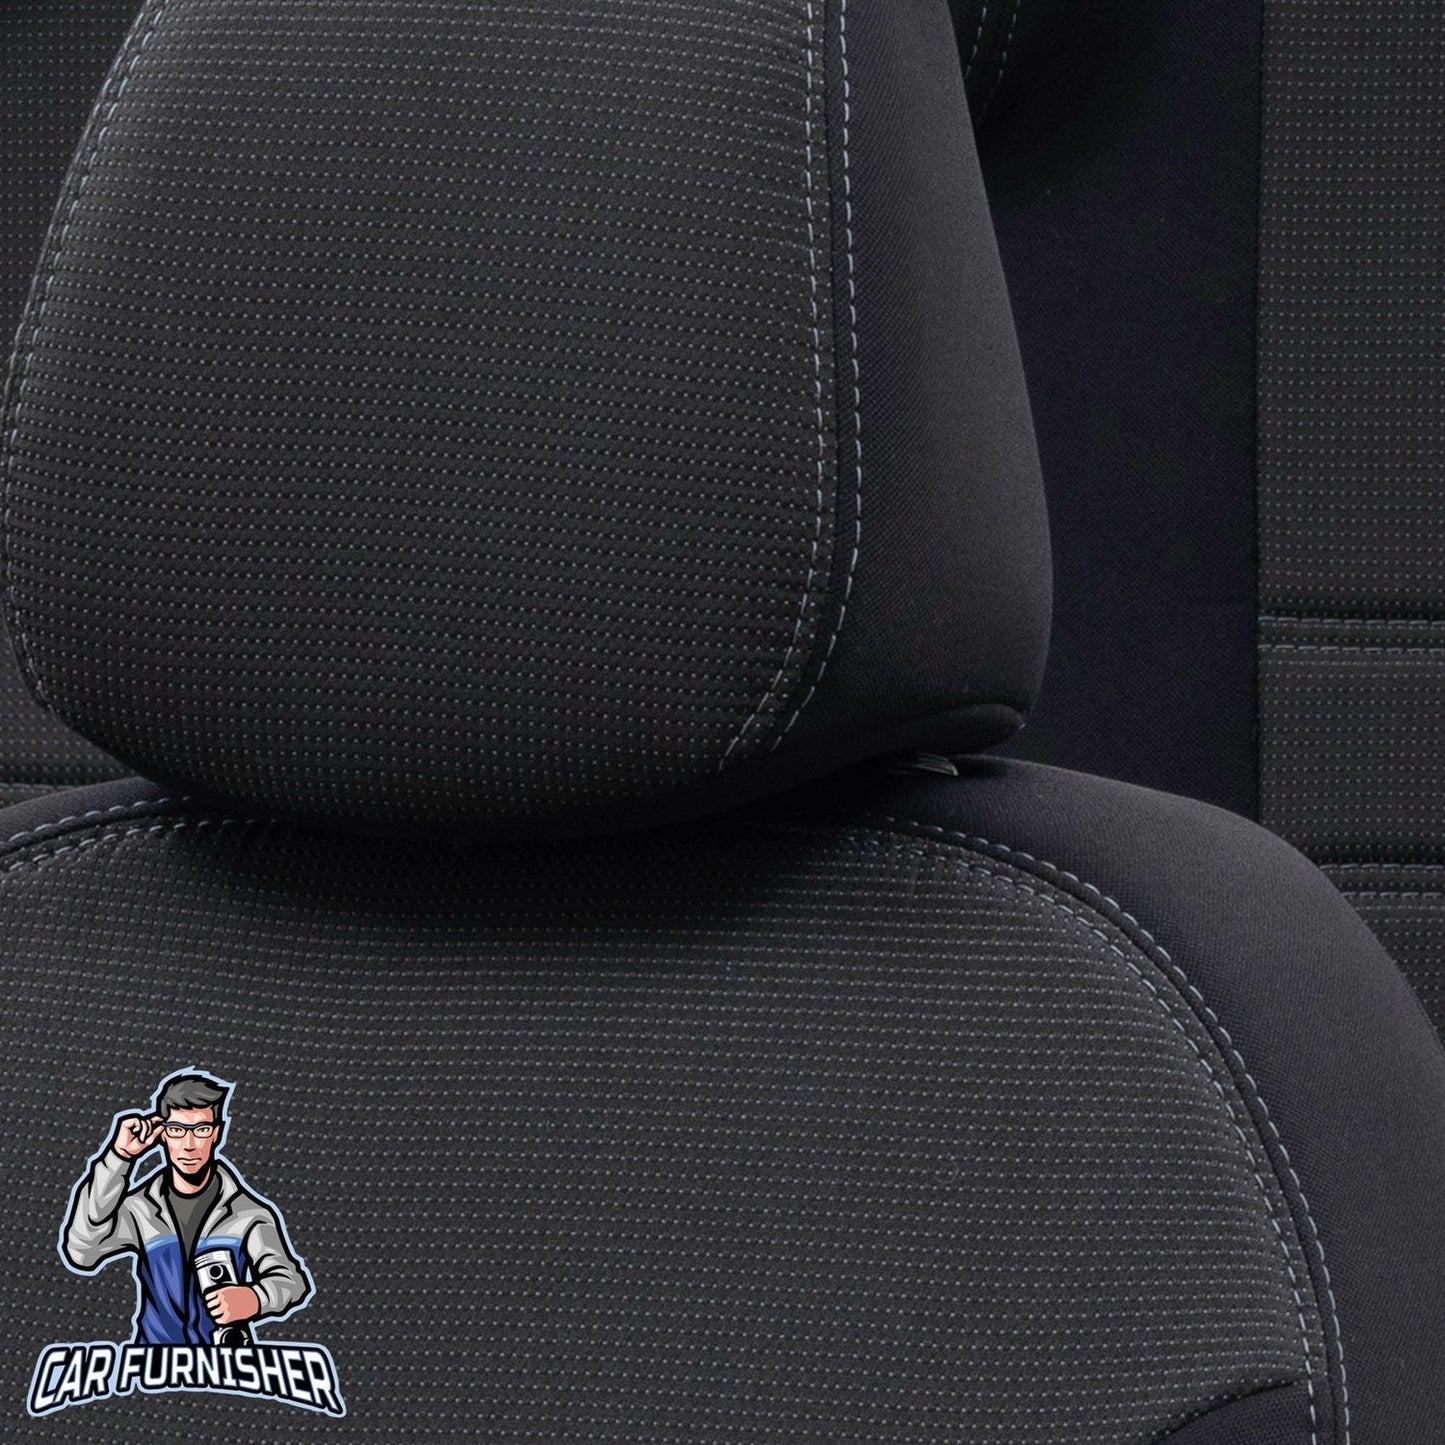 Suzuki S-Cross Car Seat Covers 2013-2018 Original Design Dark Gray Jacquard Fabric